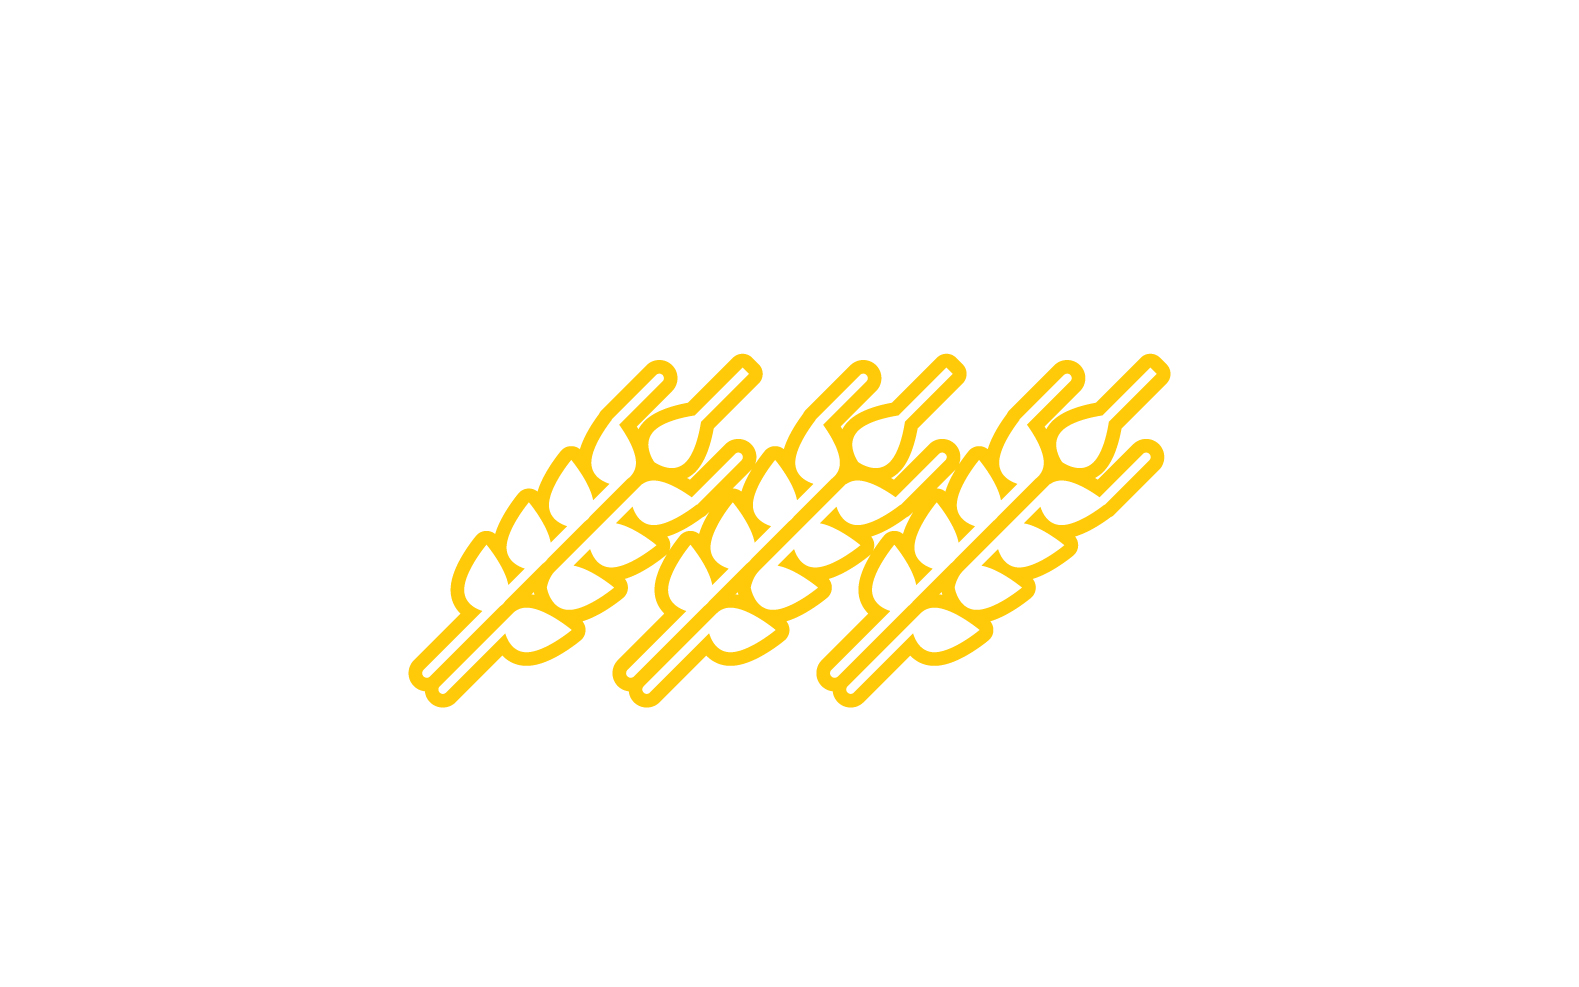 Wheat rice oat food logo design v3